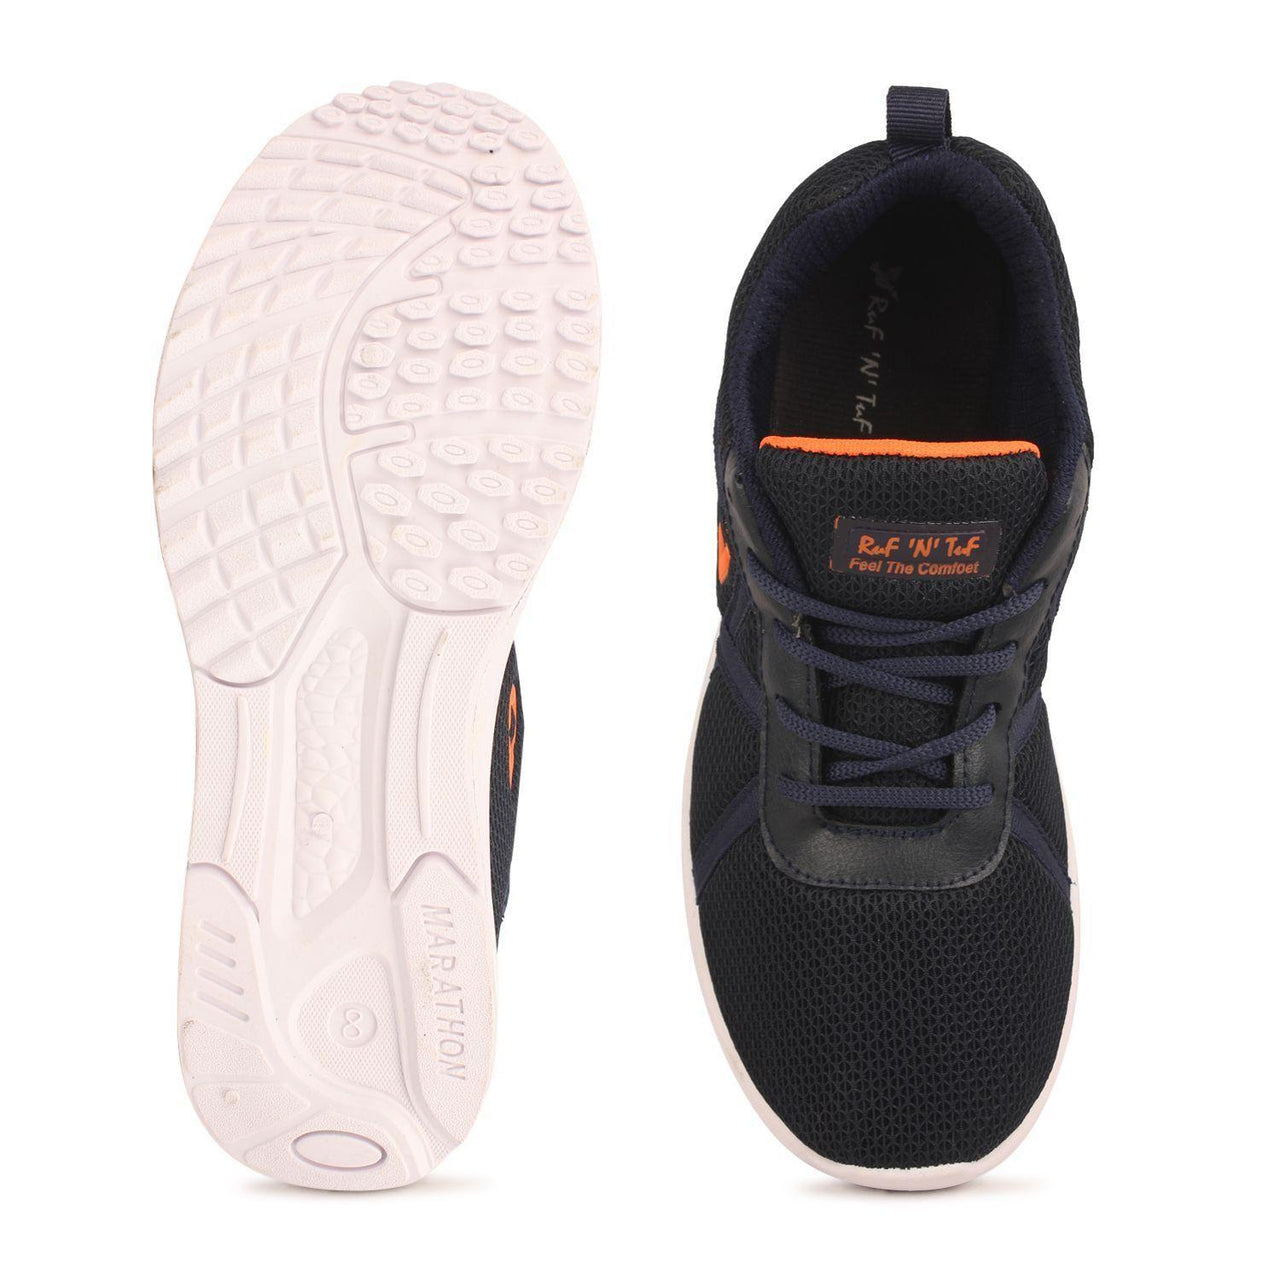 Monex New Latest Black-Orange Shoes For Mens